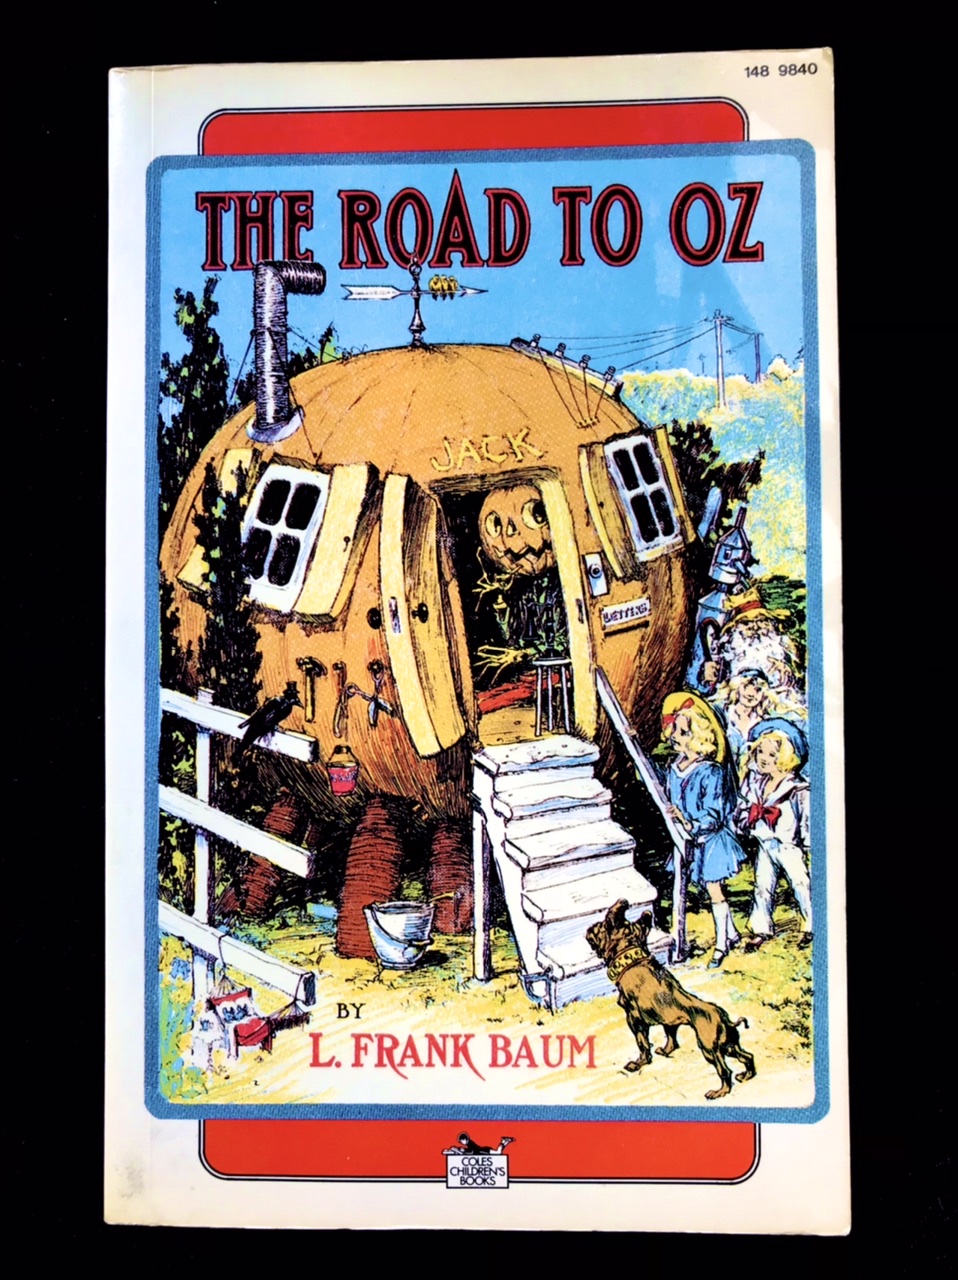 The Wizard of Oz by L. Frank Baum, Bundle #2